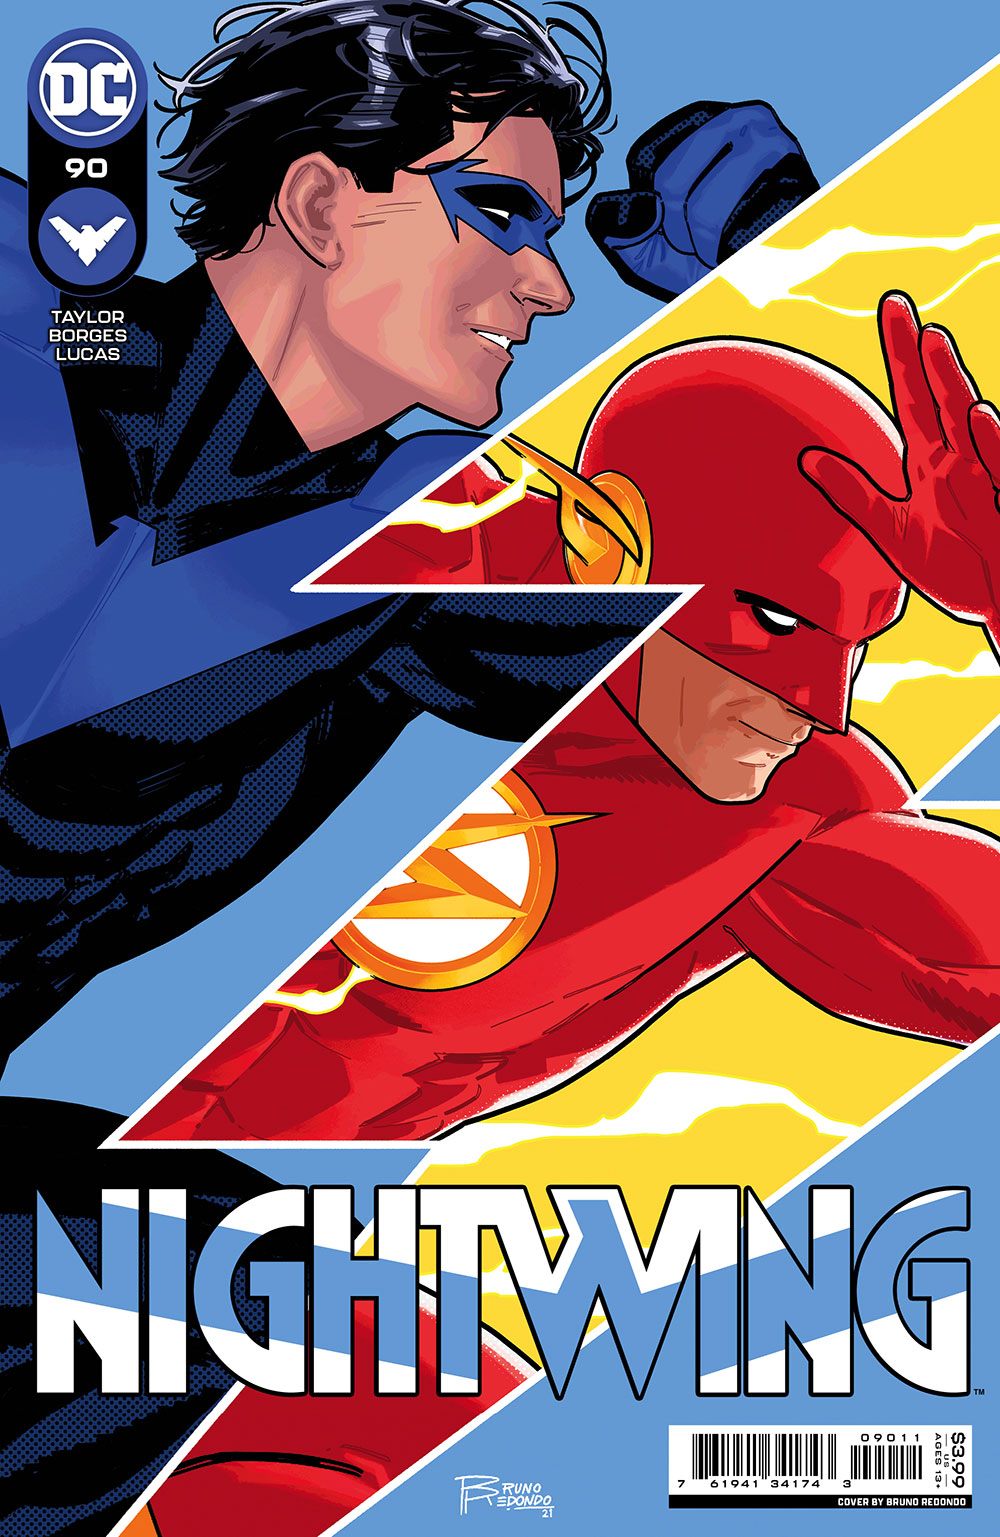 Nightwing #90 Cover A Bruno Redondo (2016)